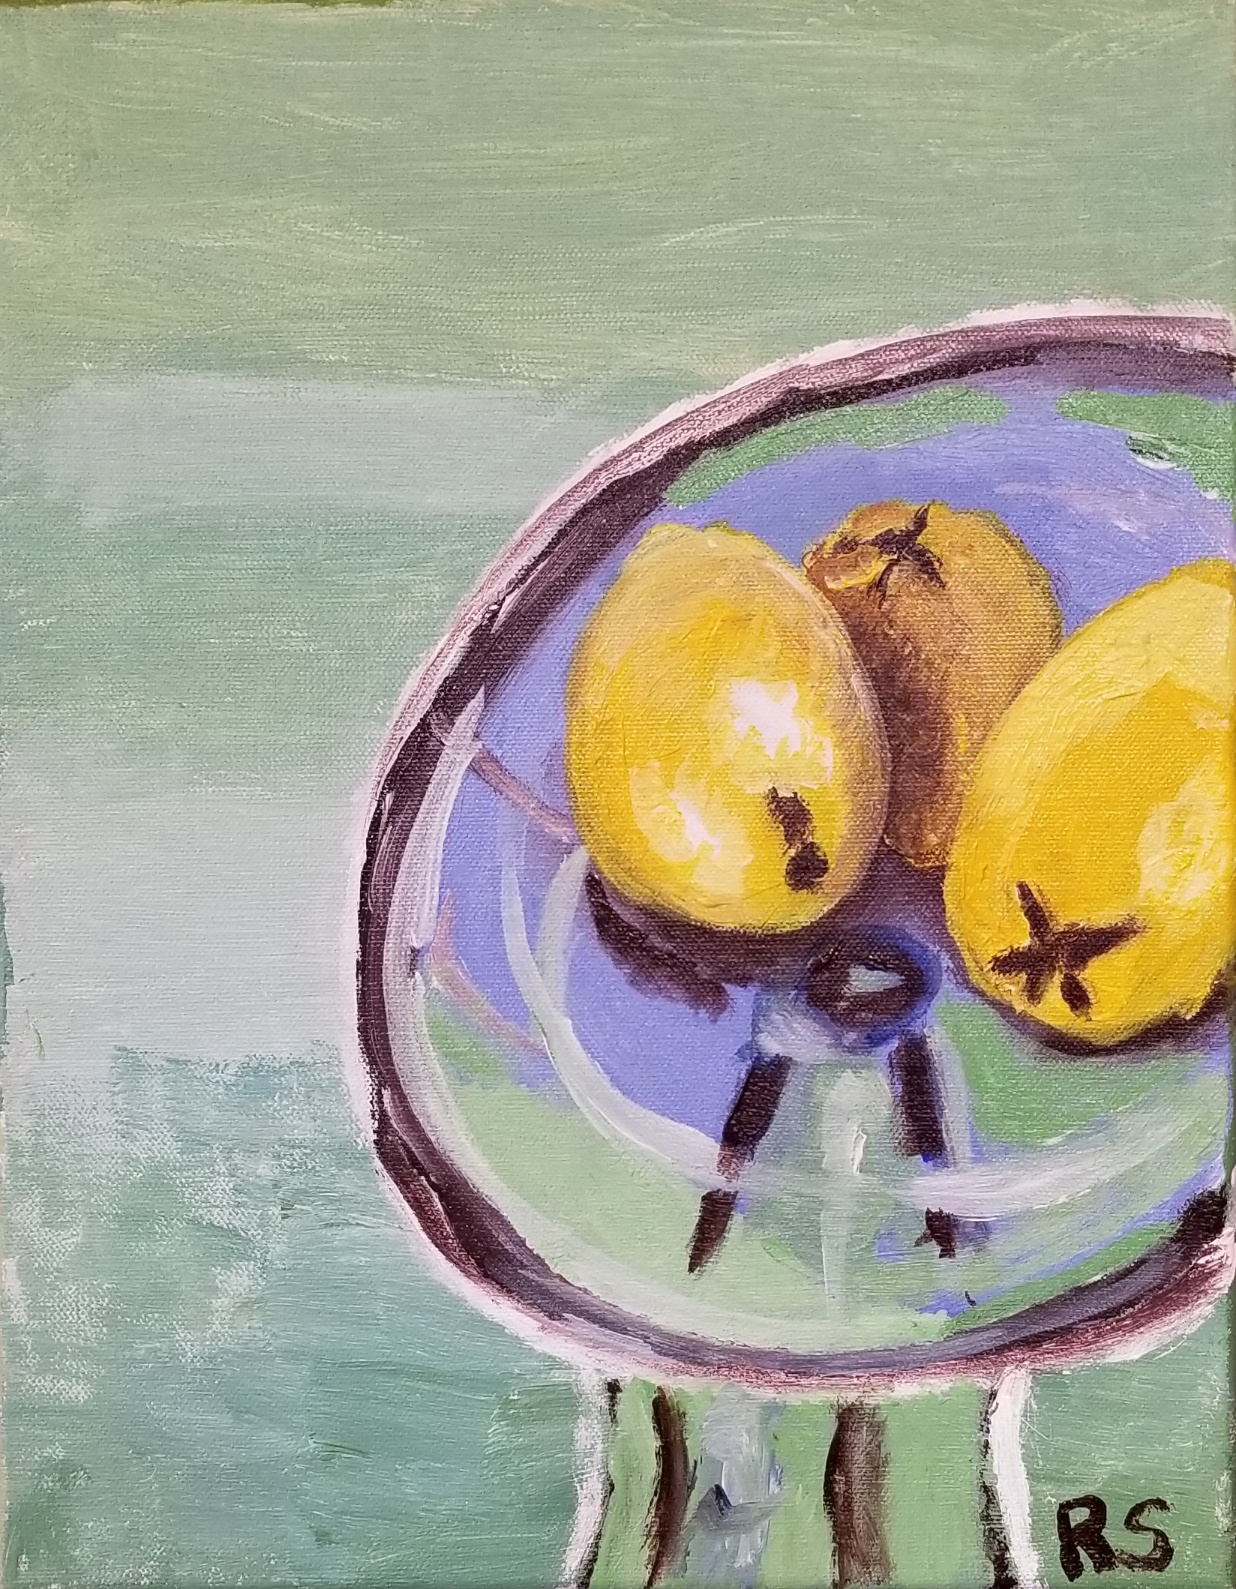 Raymond Shaw's 3 Lemons Painting